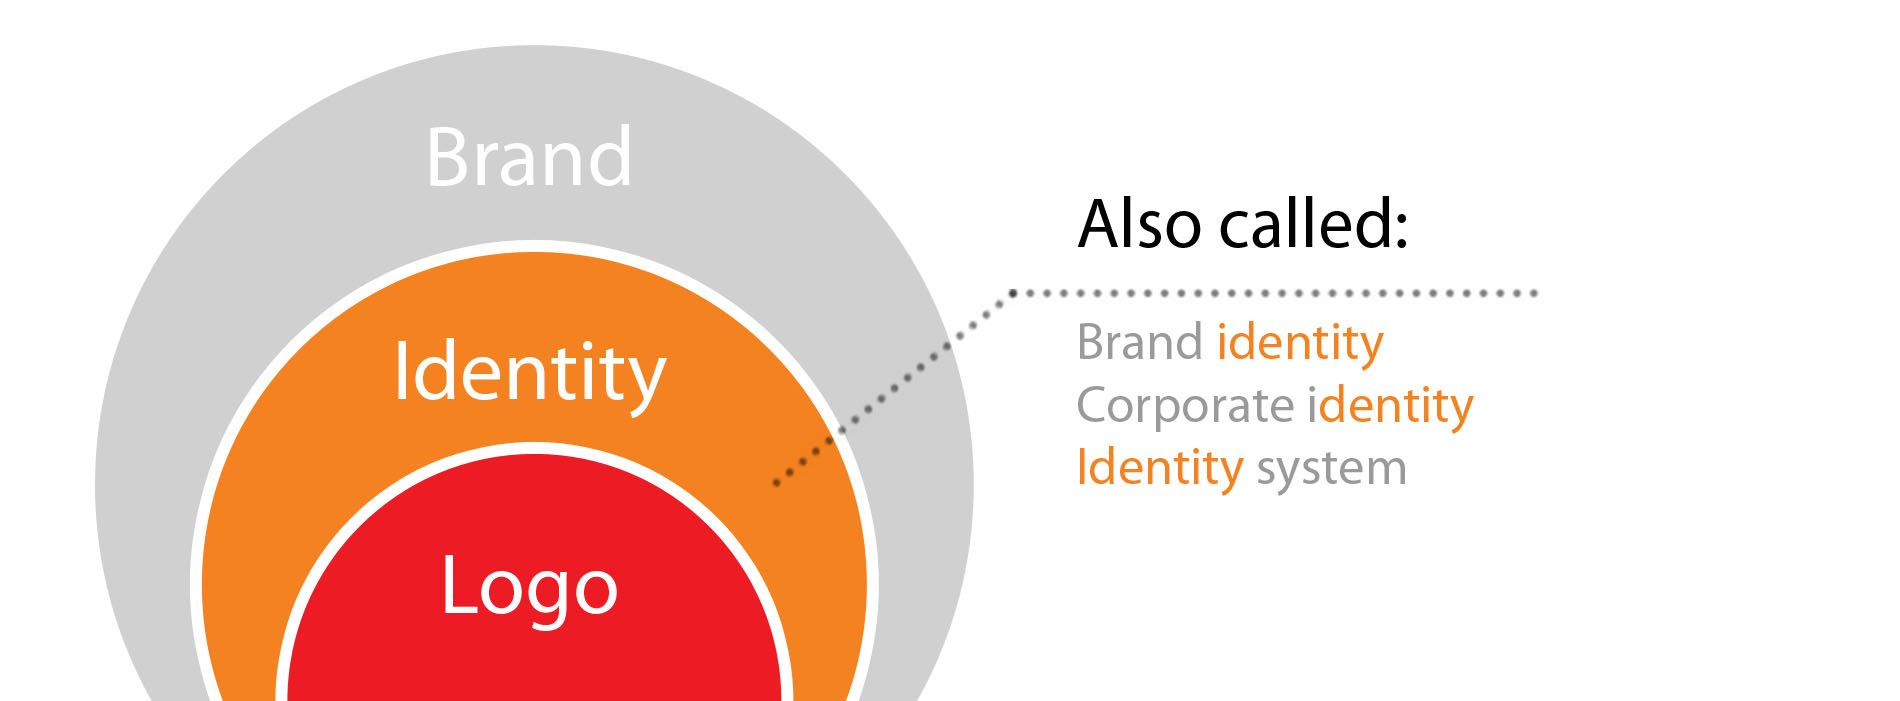 Identity design, brand, logo explained